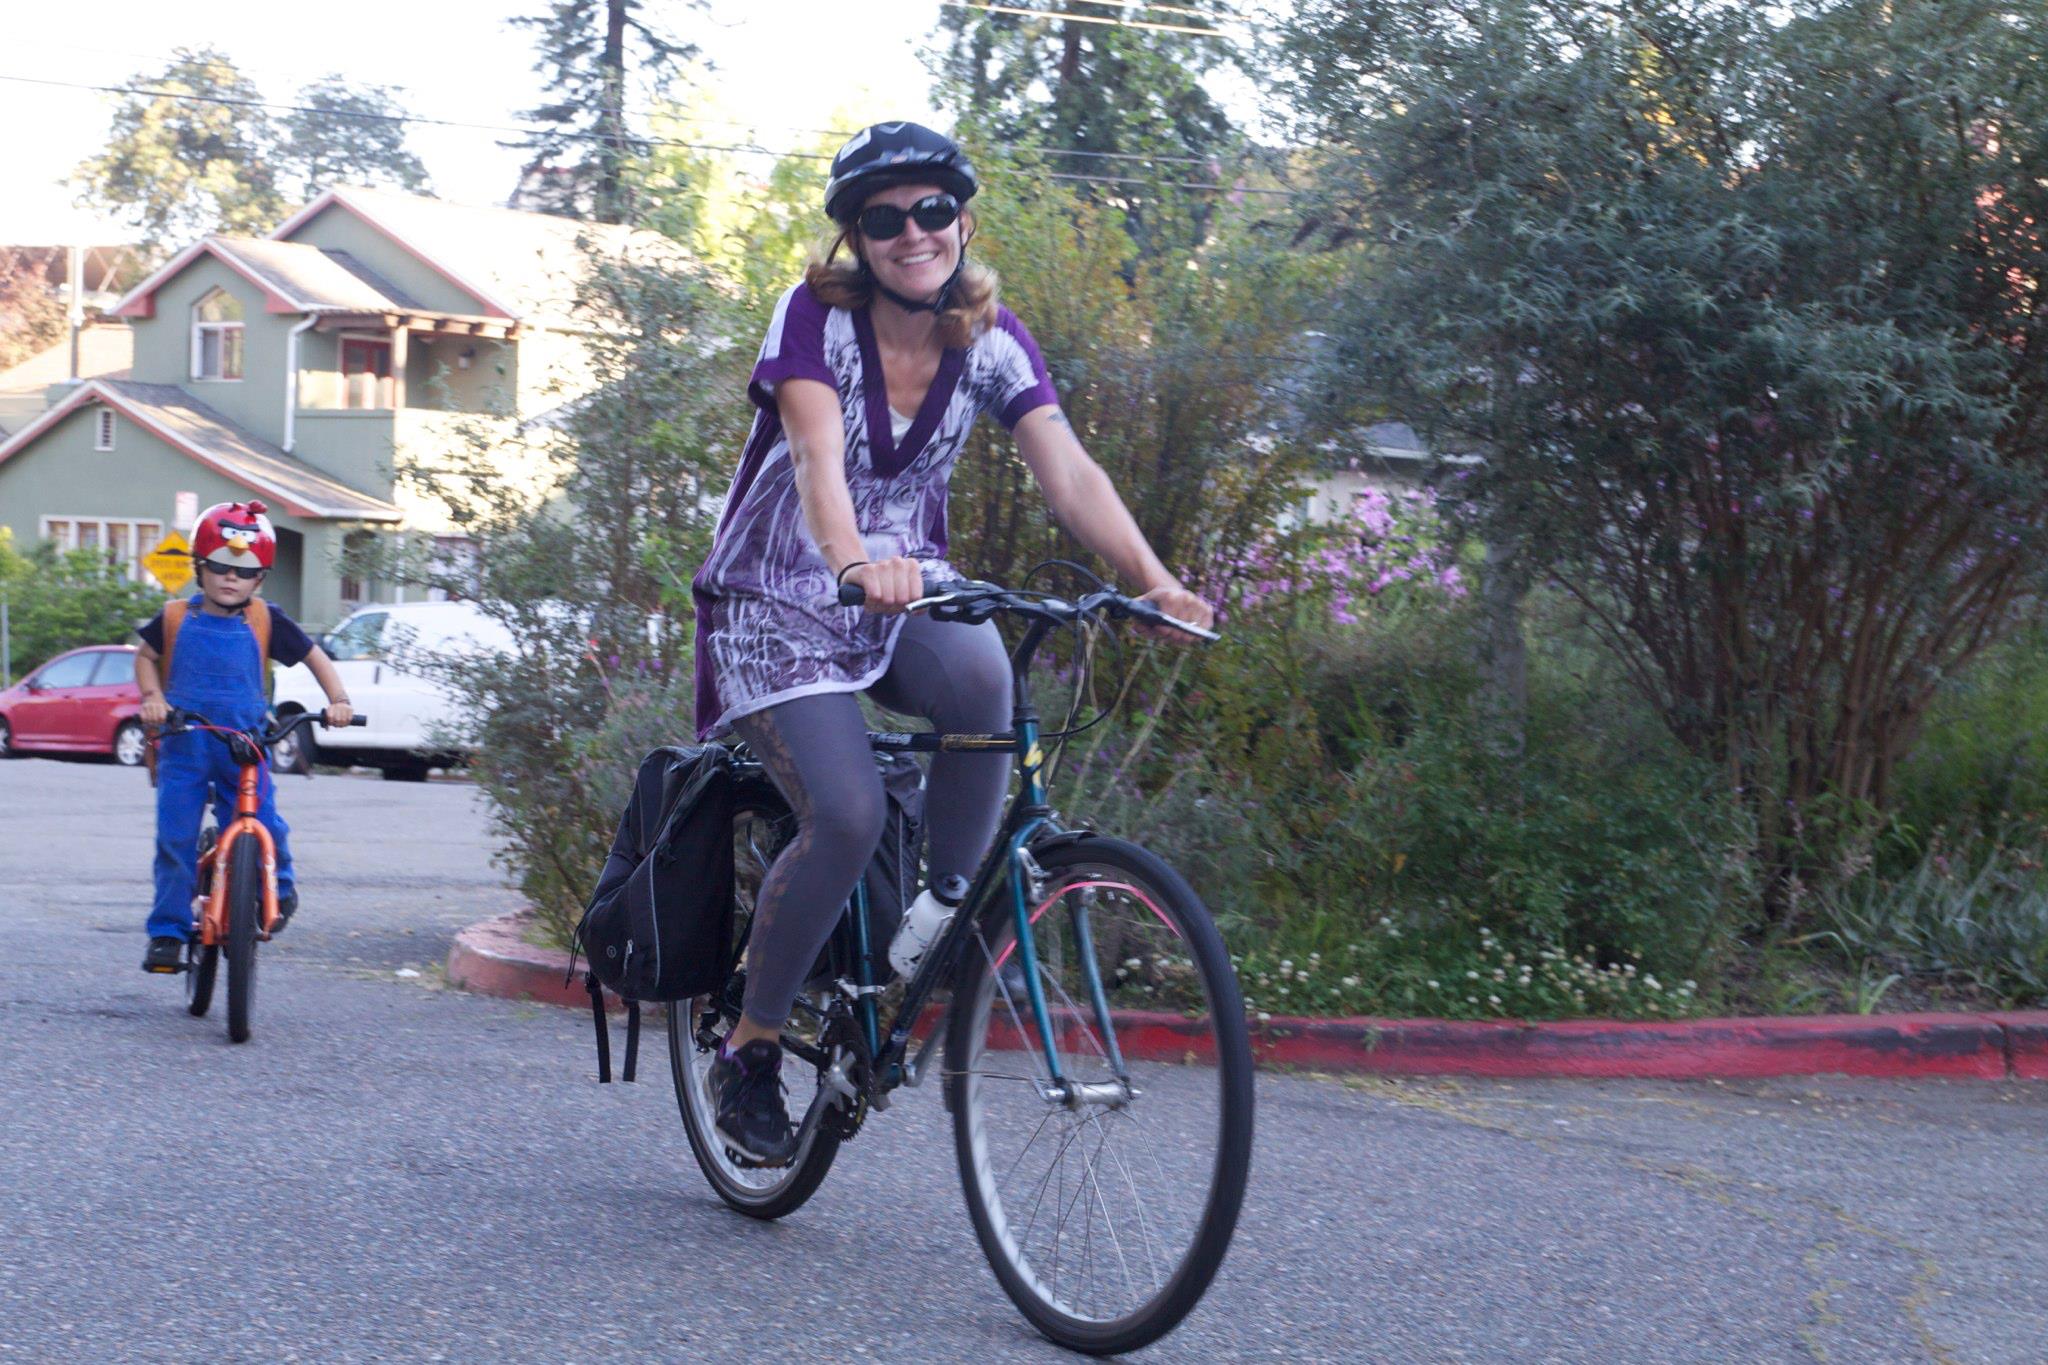 Megan riding her bike with son Myles